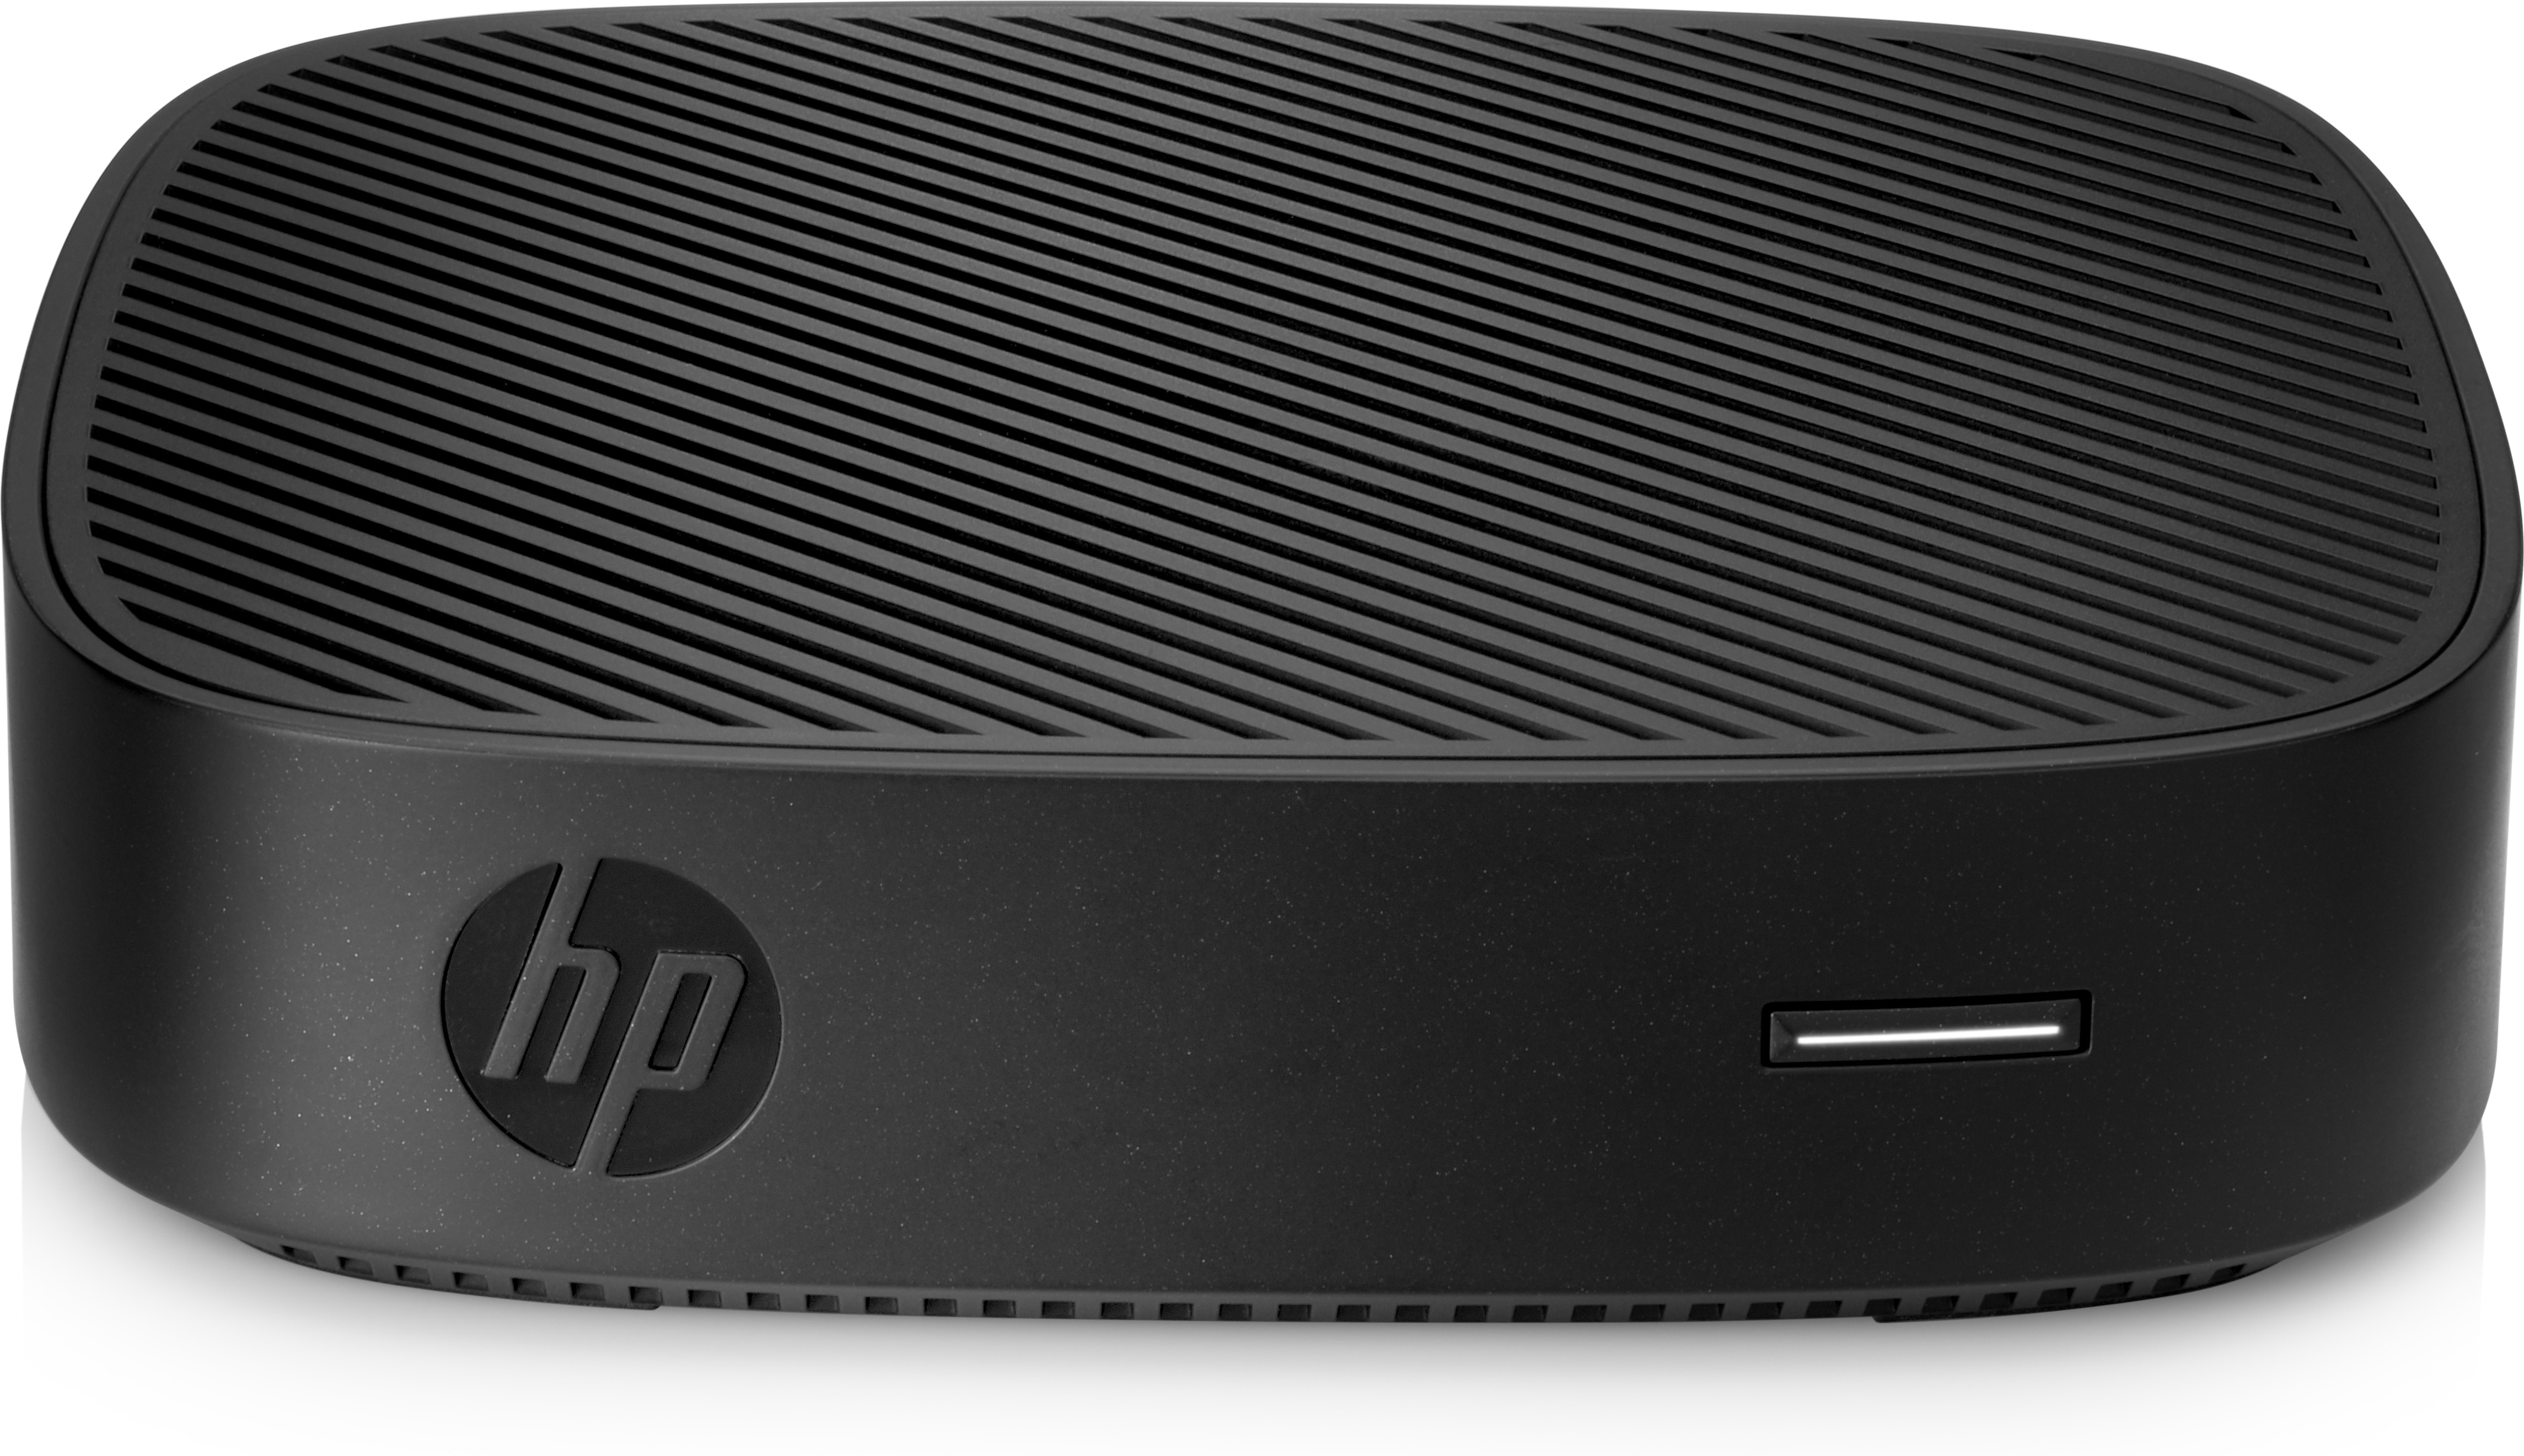 HP t430 - Thin client - DTS - 1 x Celeron N4020 / 1.1 GHz - RAM 2 GB - flash - eMMC 16 GB - UHD Graphics 600 - GigE - WLAN: 802.11a/b/g/n/ac, Bluetooth 5.1 - HP ThinPro - monitor: none - keyboard: US